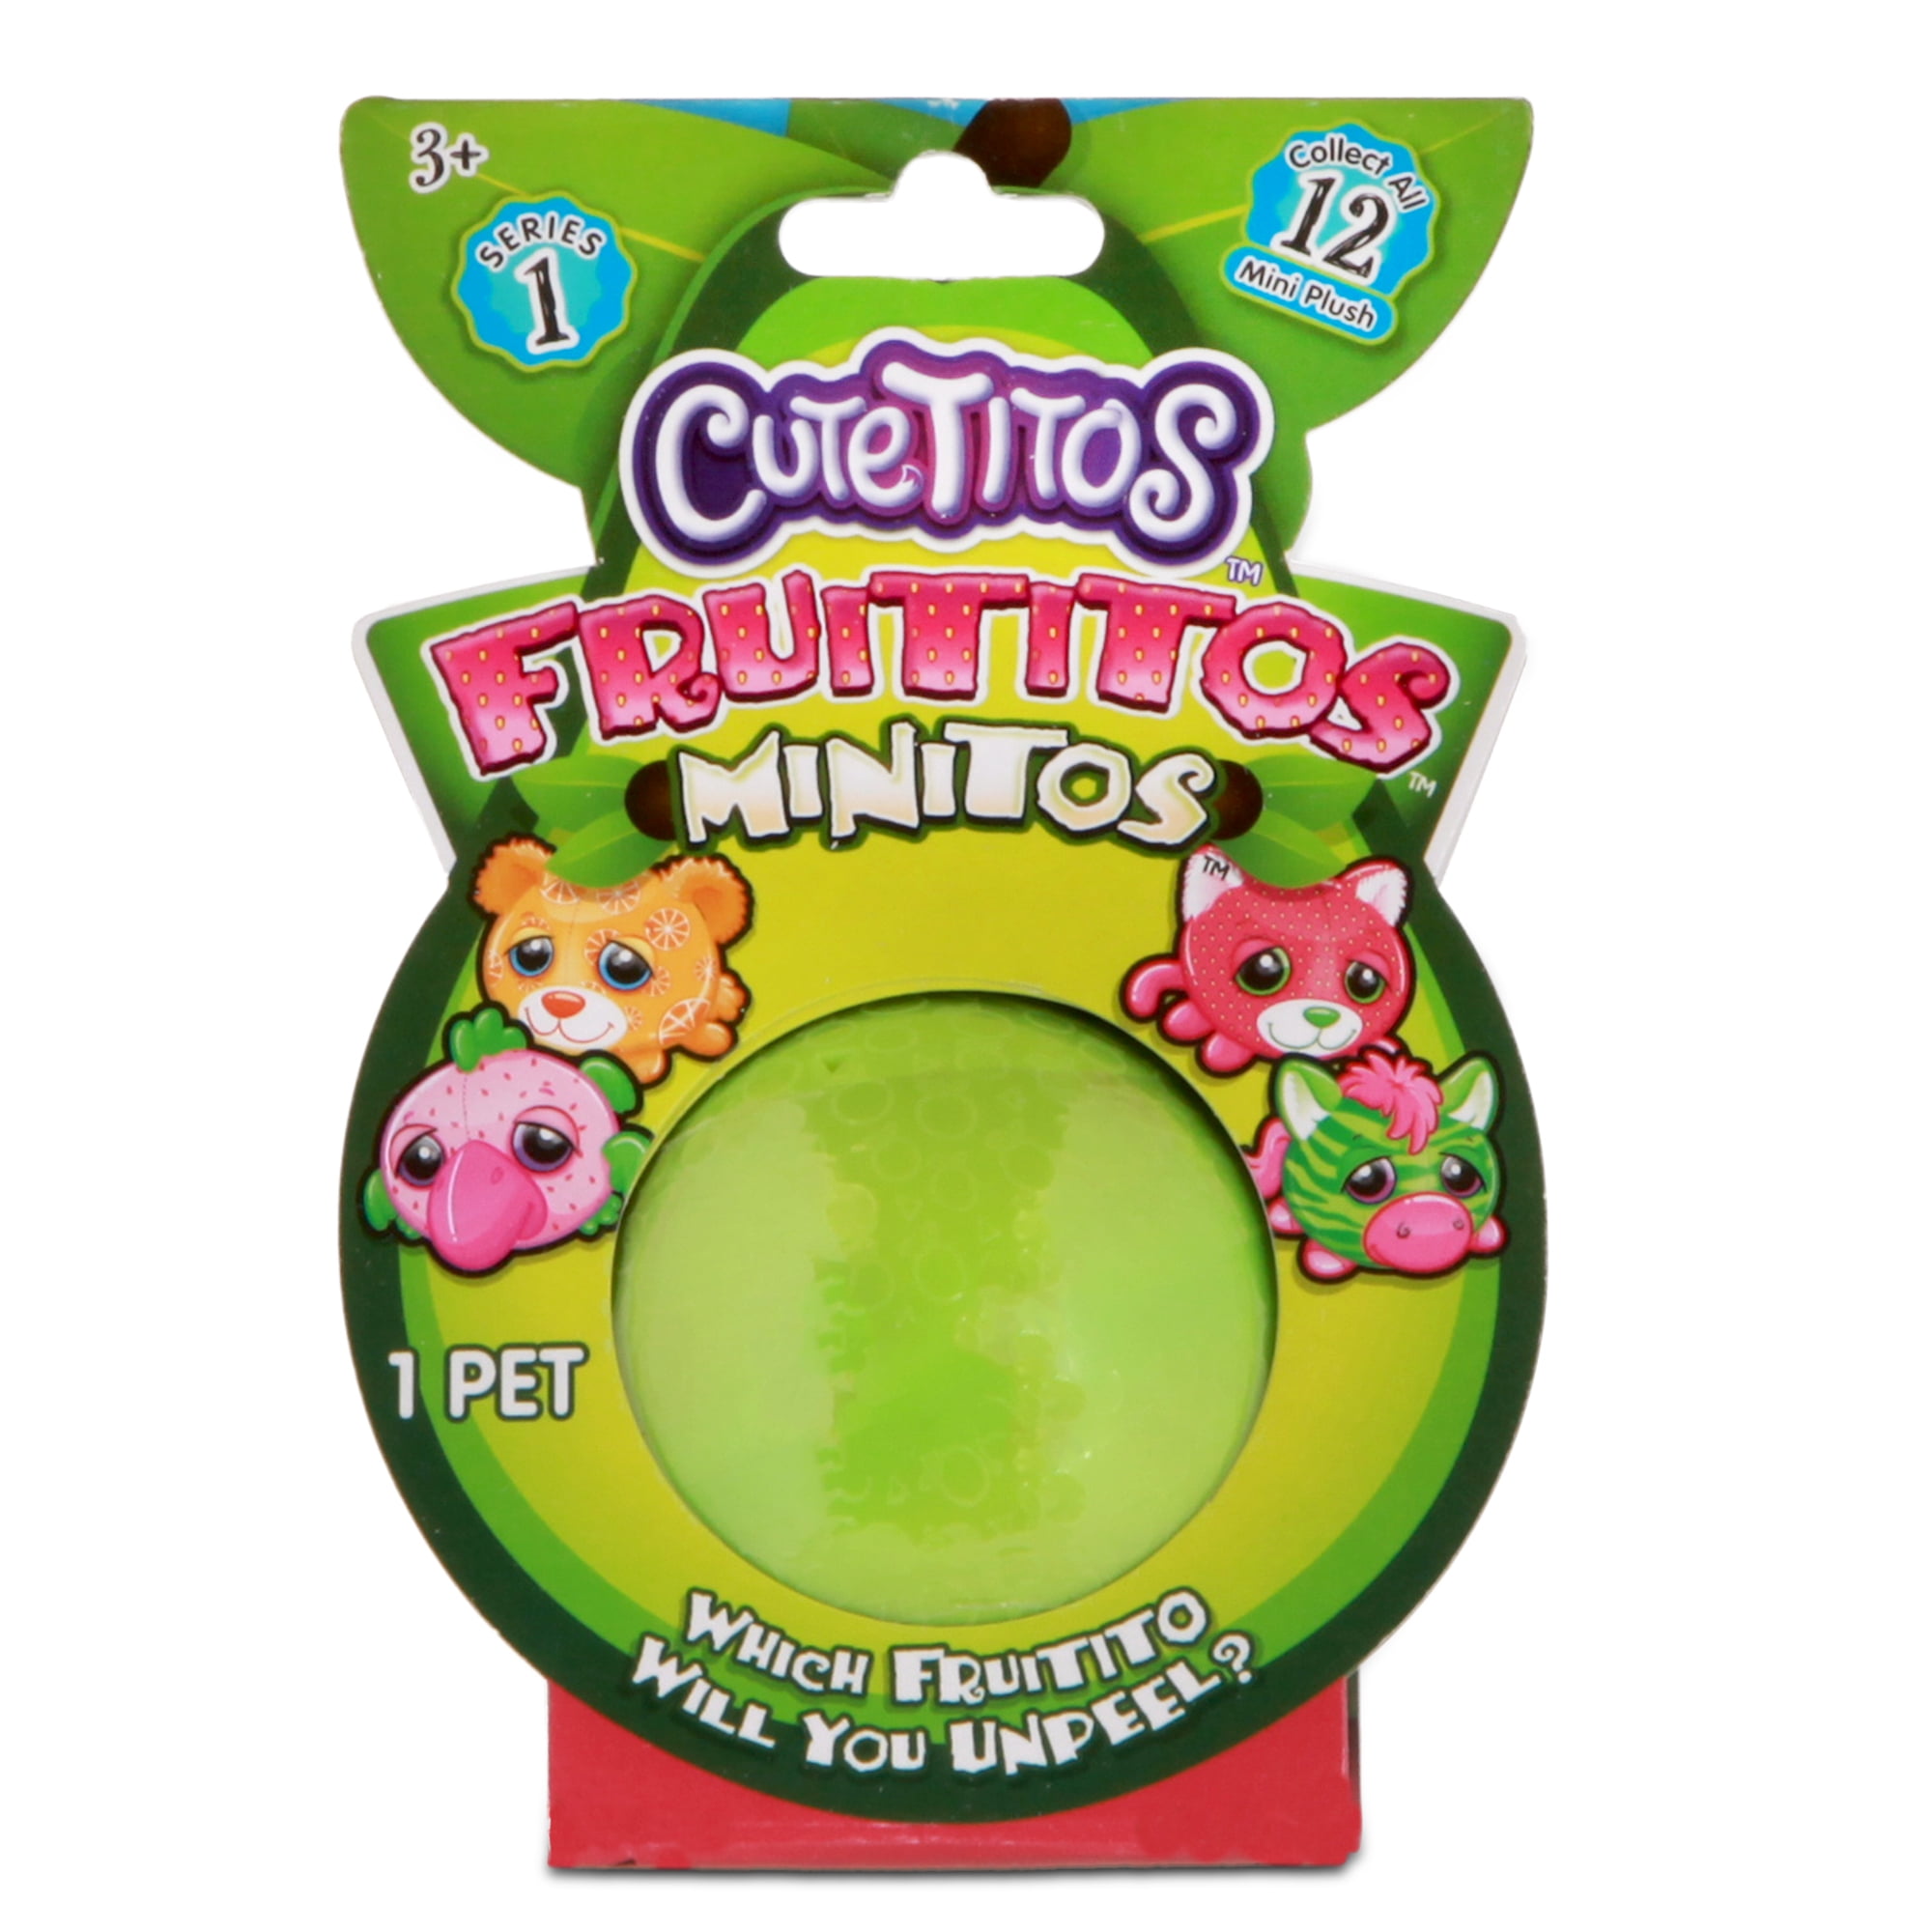 Cutetitos Fruititos Minitos Unicornito Punchito Plush Stuffed Animal NEW 